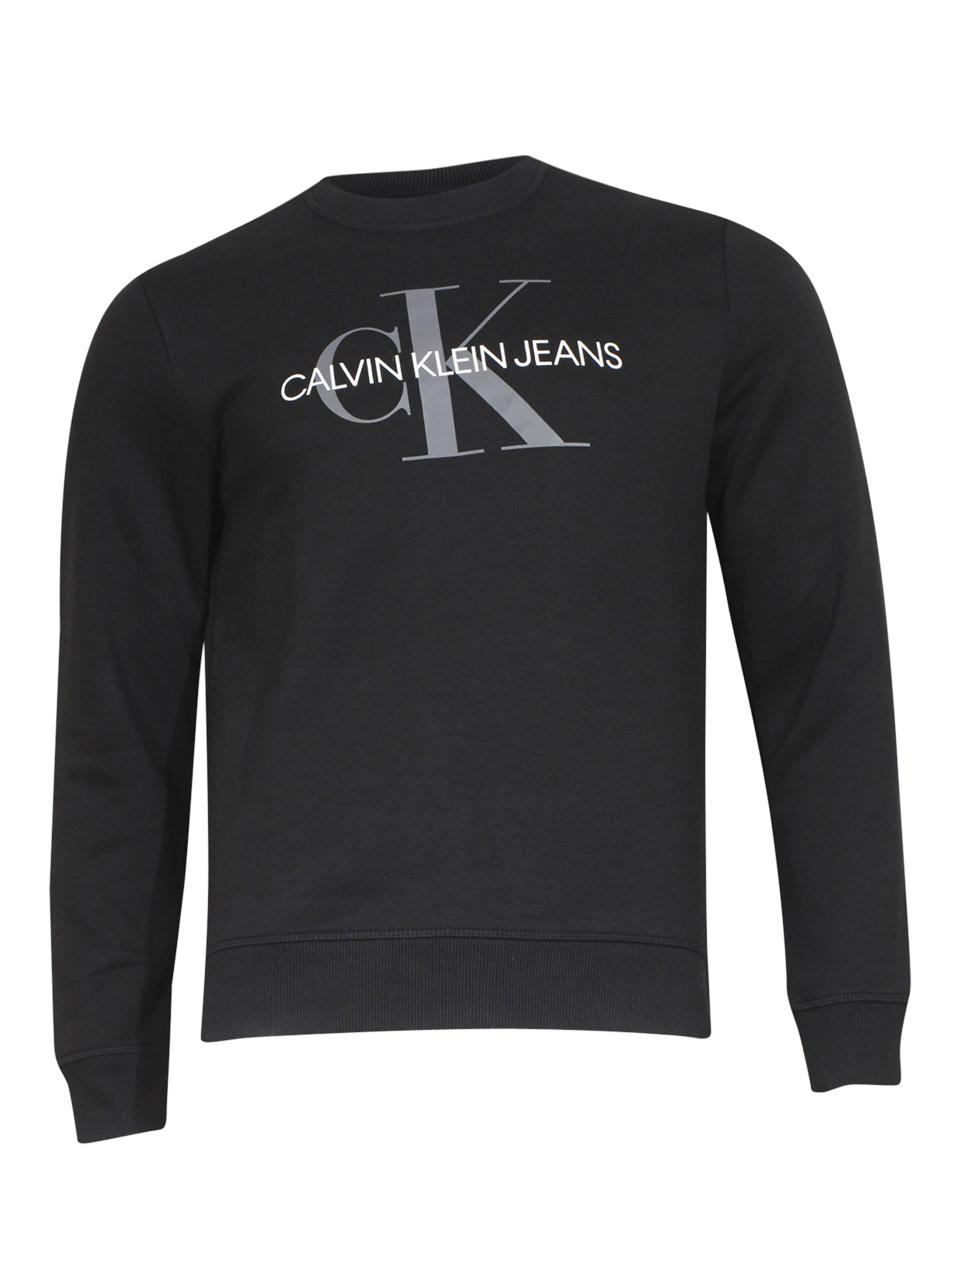 calvin klein logo crew neck sweatshirt